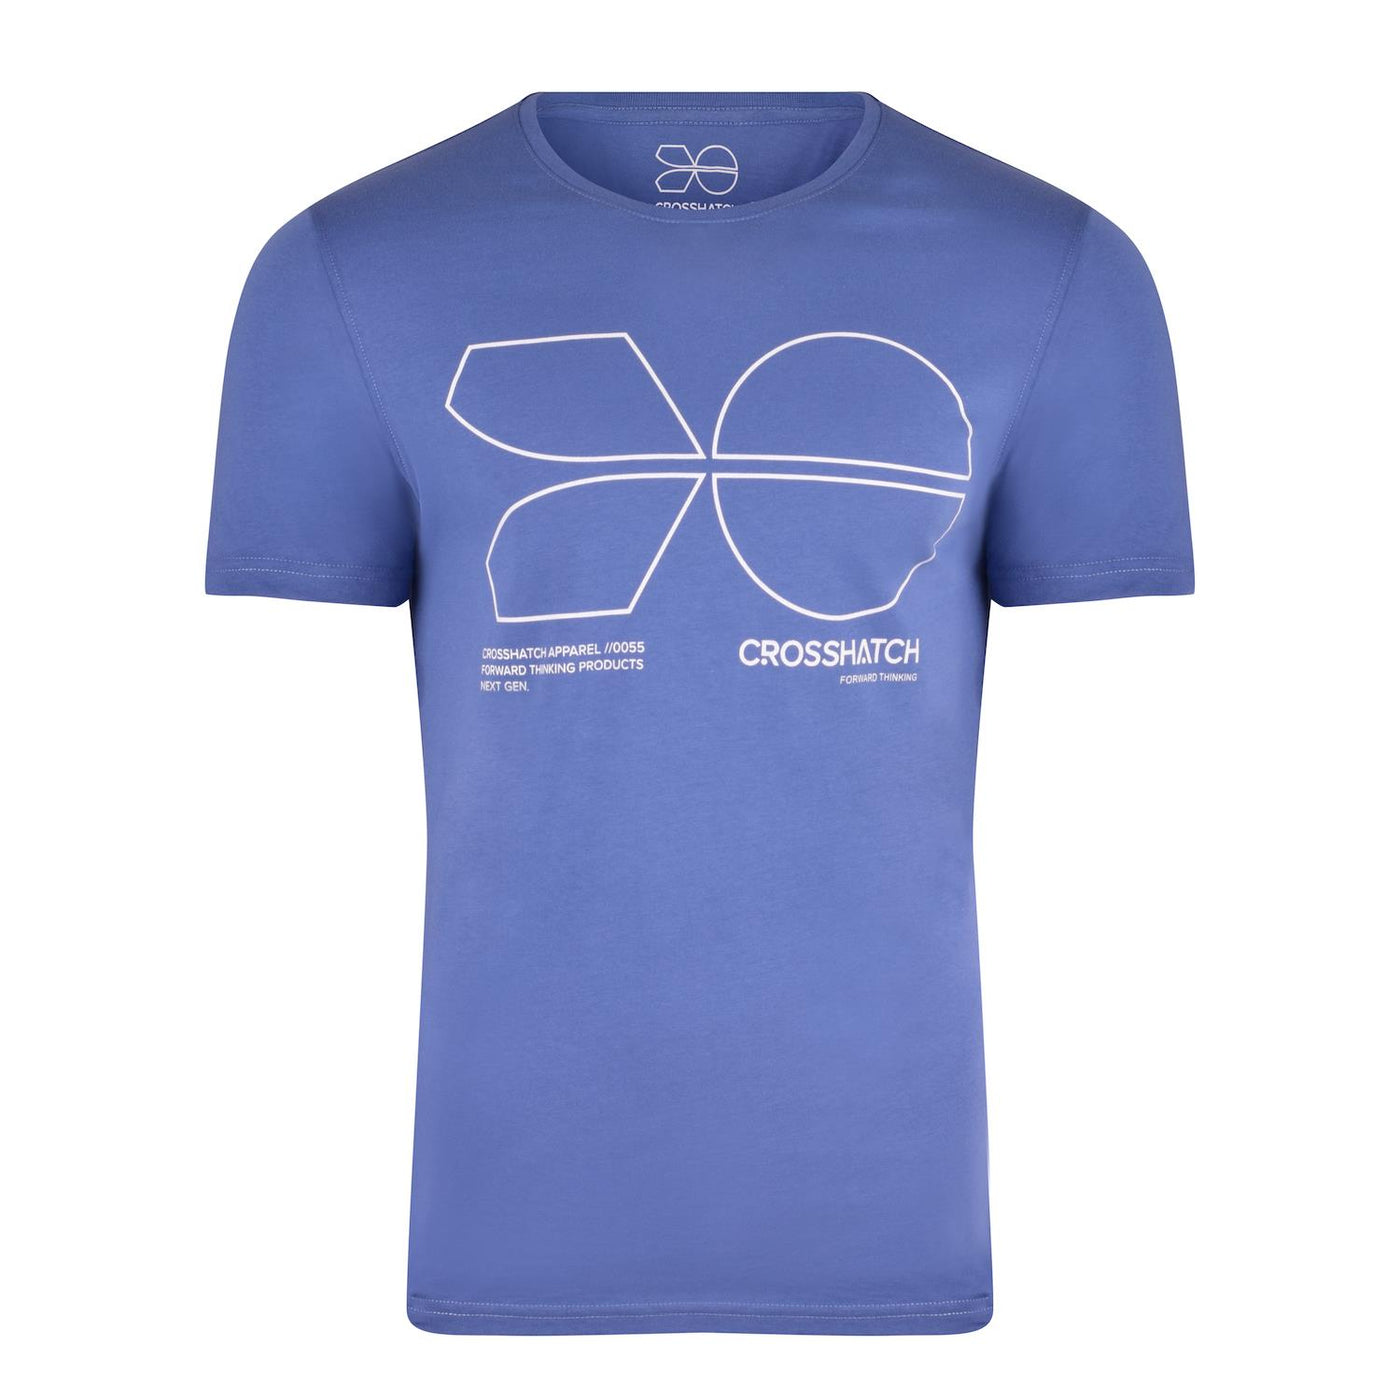 Crosshatch 5 Pack Designer Assorted T Shirts Crew Neck Soft Cotton Tee Top S M L XL XXL